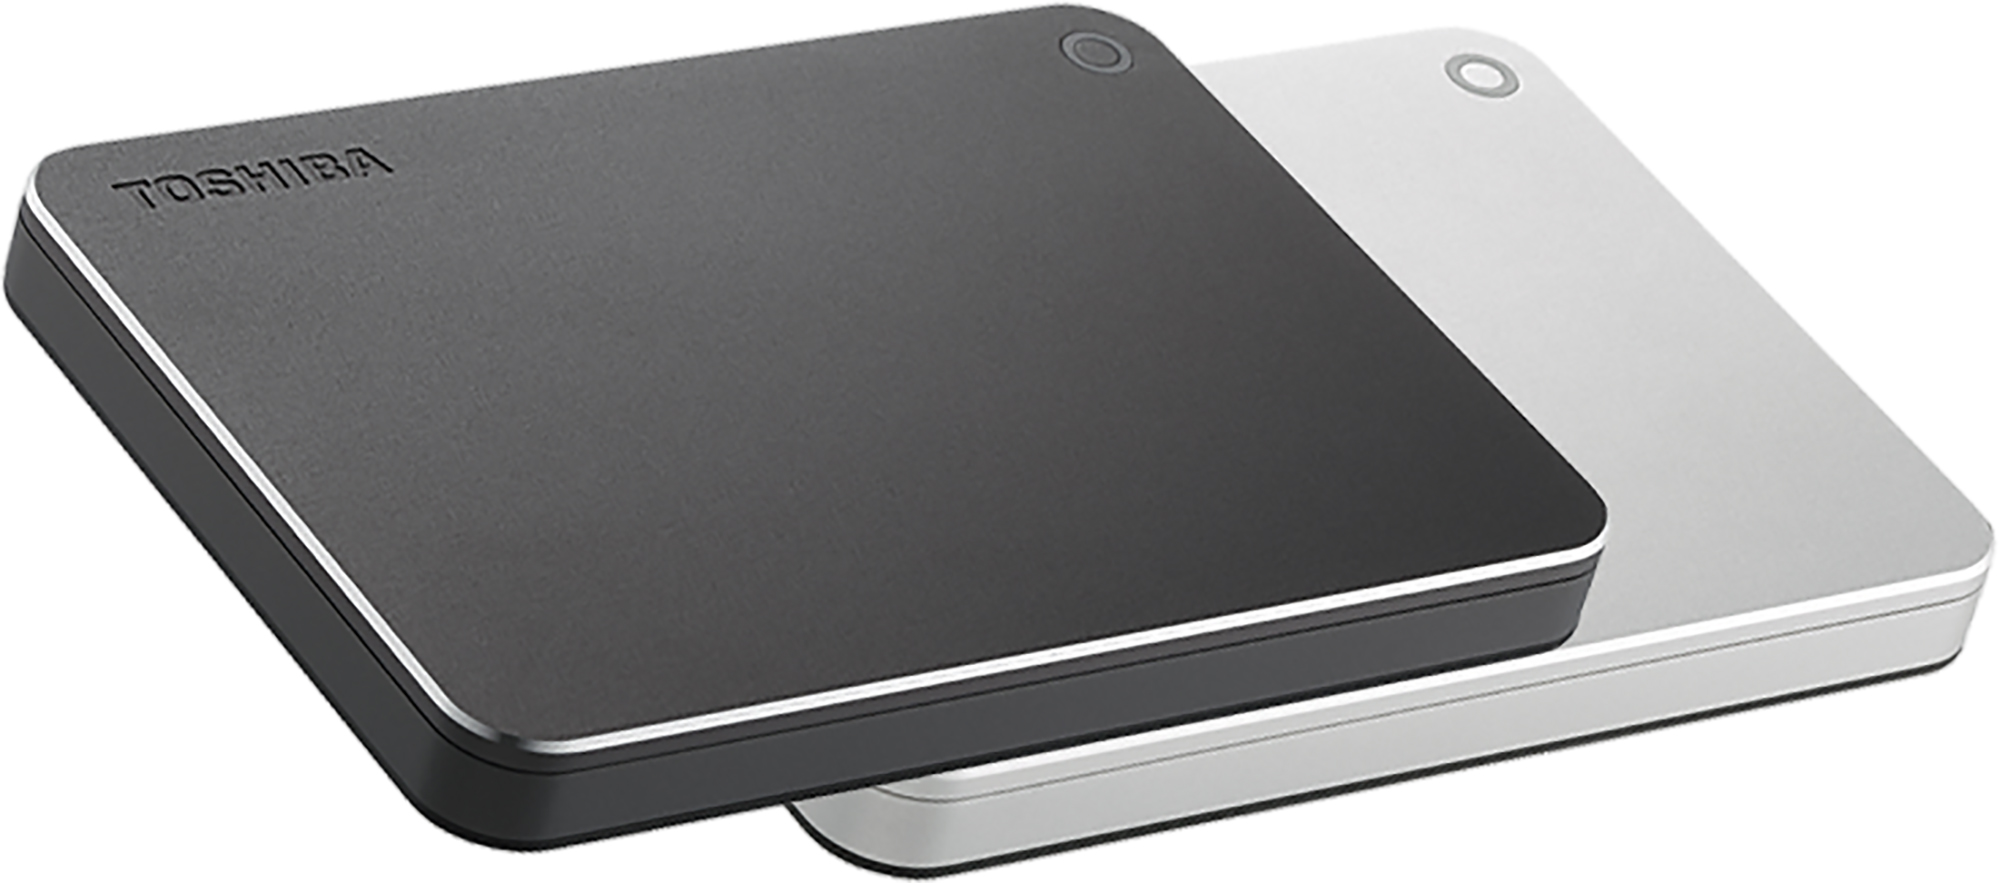 TOSHIBA推出全新 4TB CANVIO 外接式硬碟 儲存個資更安全可靠